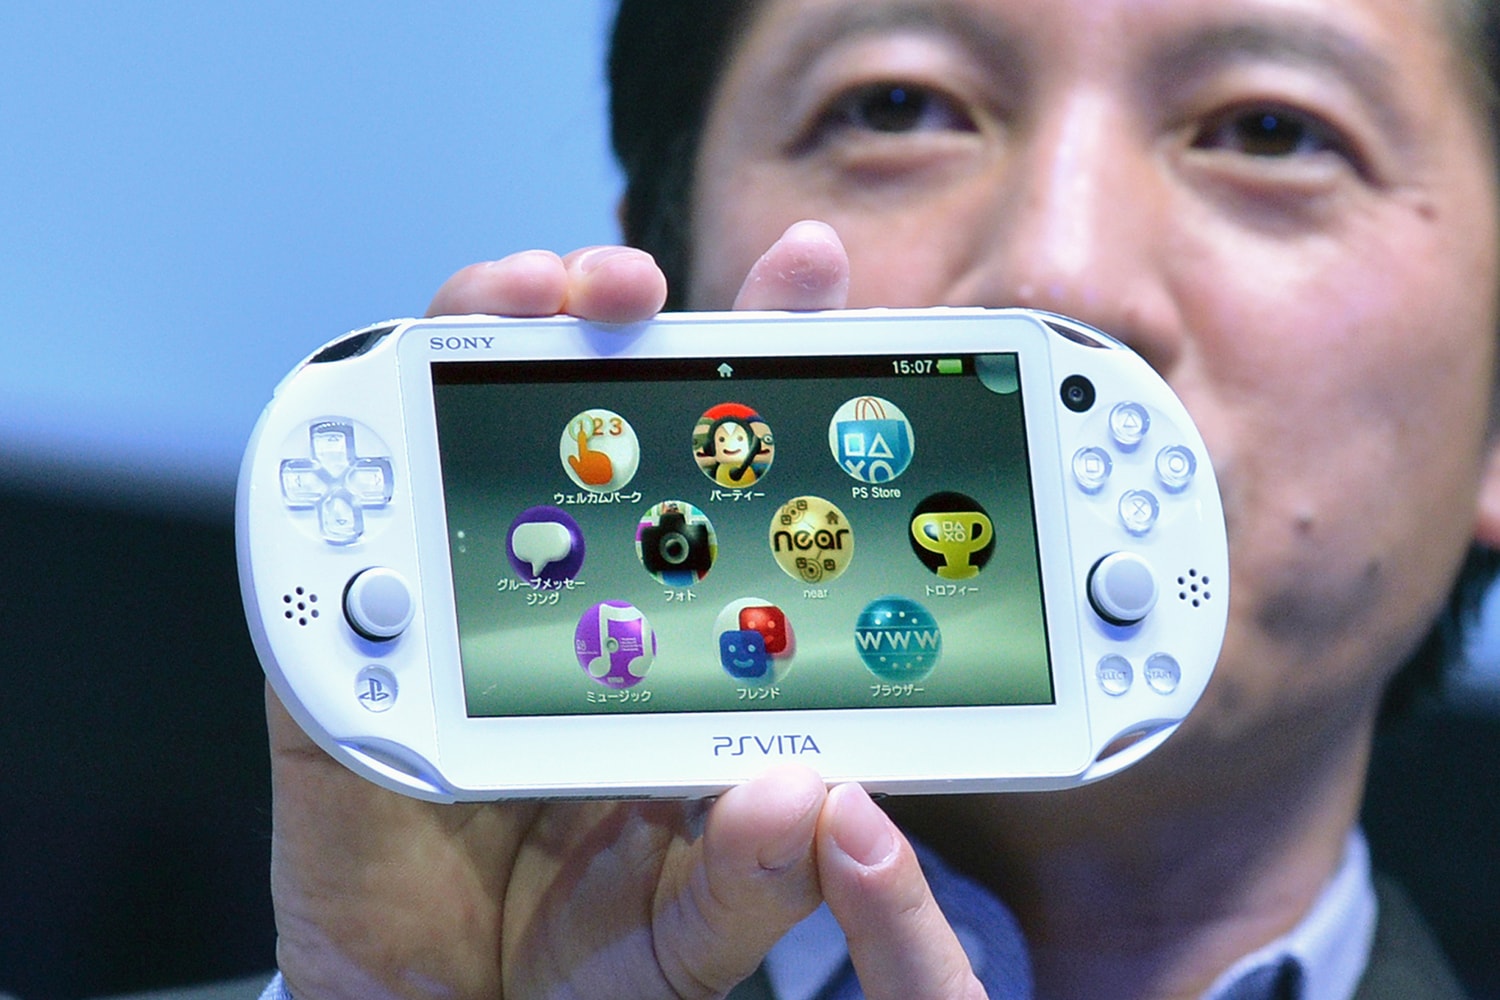 PlayStation Vita 